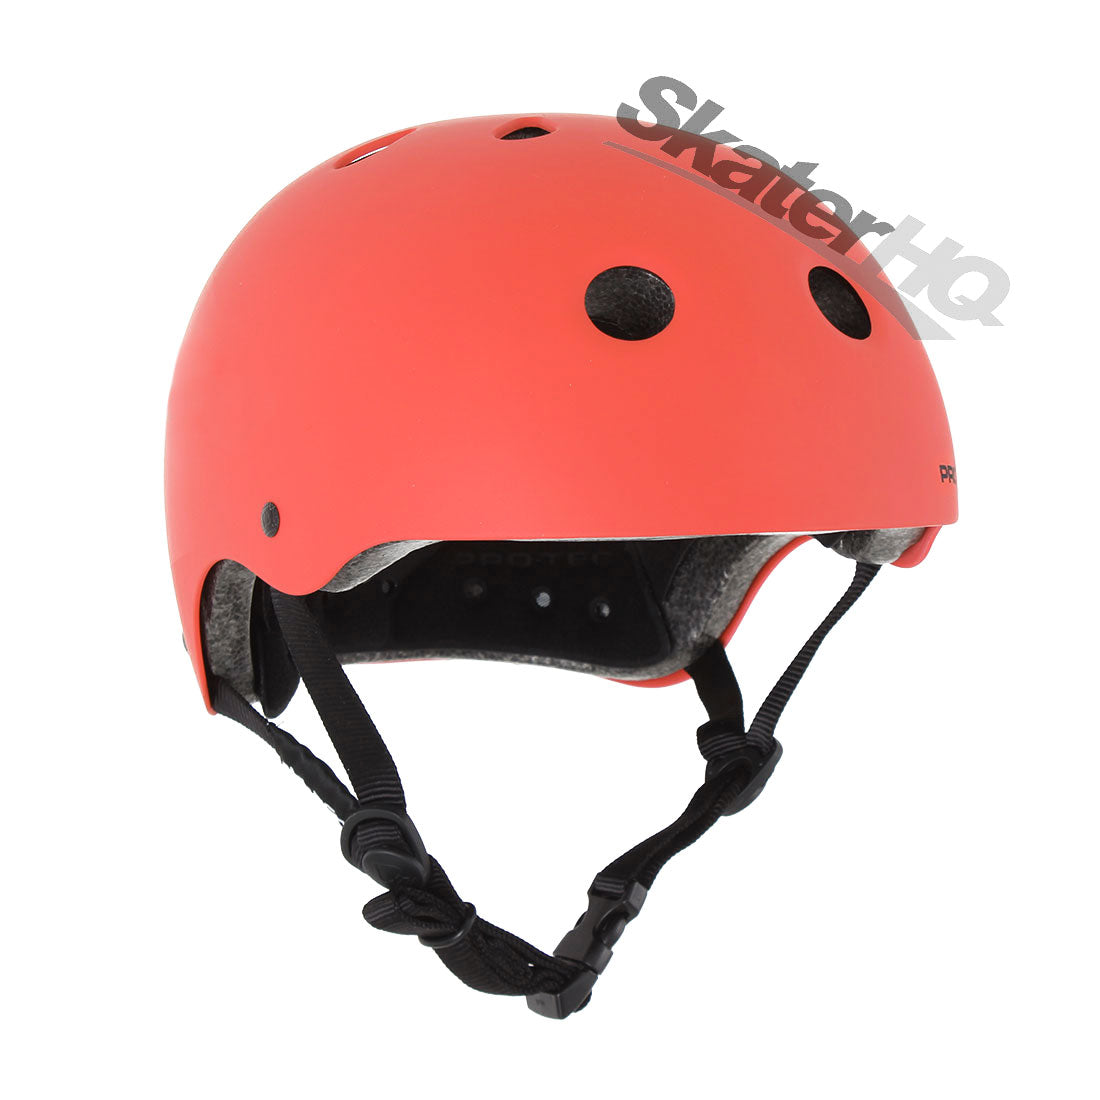 Pro-Tec Classic Cert Matte Bright Red - Small Helmets